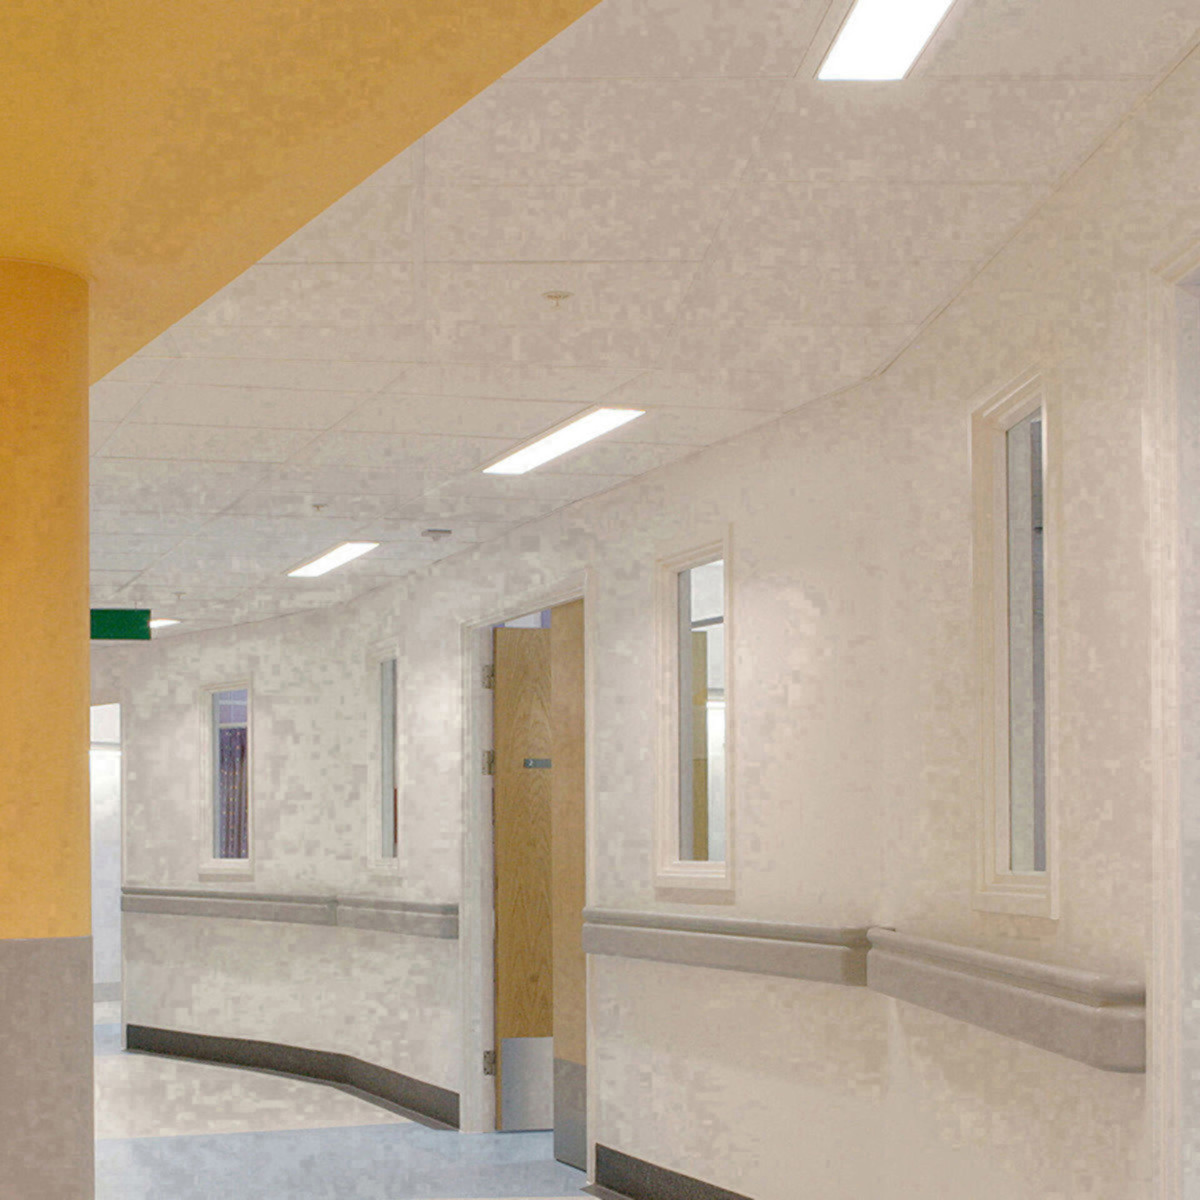 Rockfon Medical Plus Healthcare Ceiling Tiles